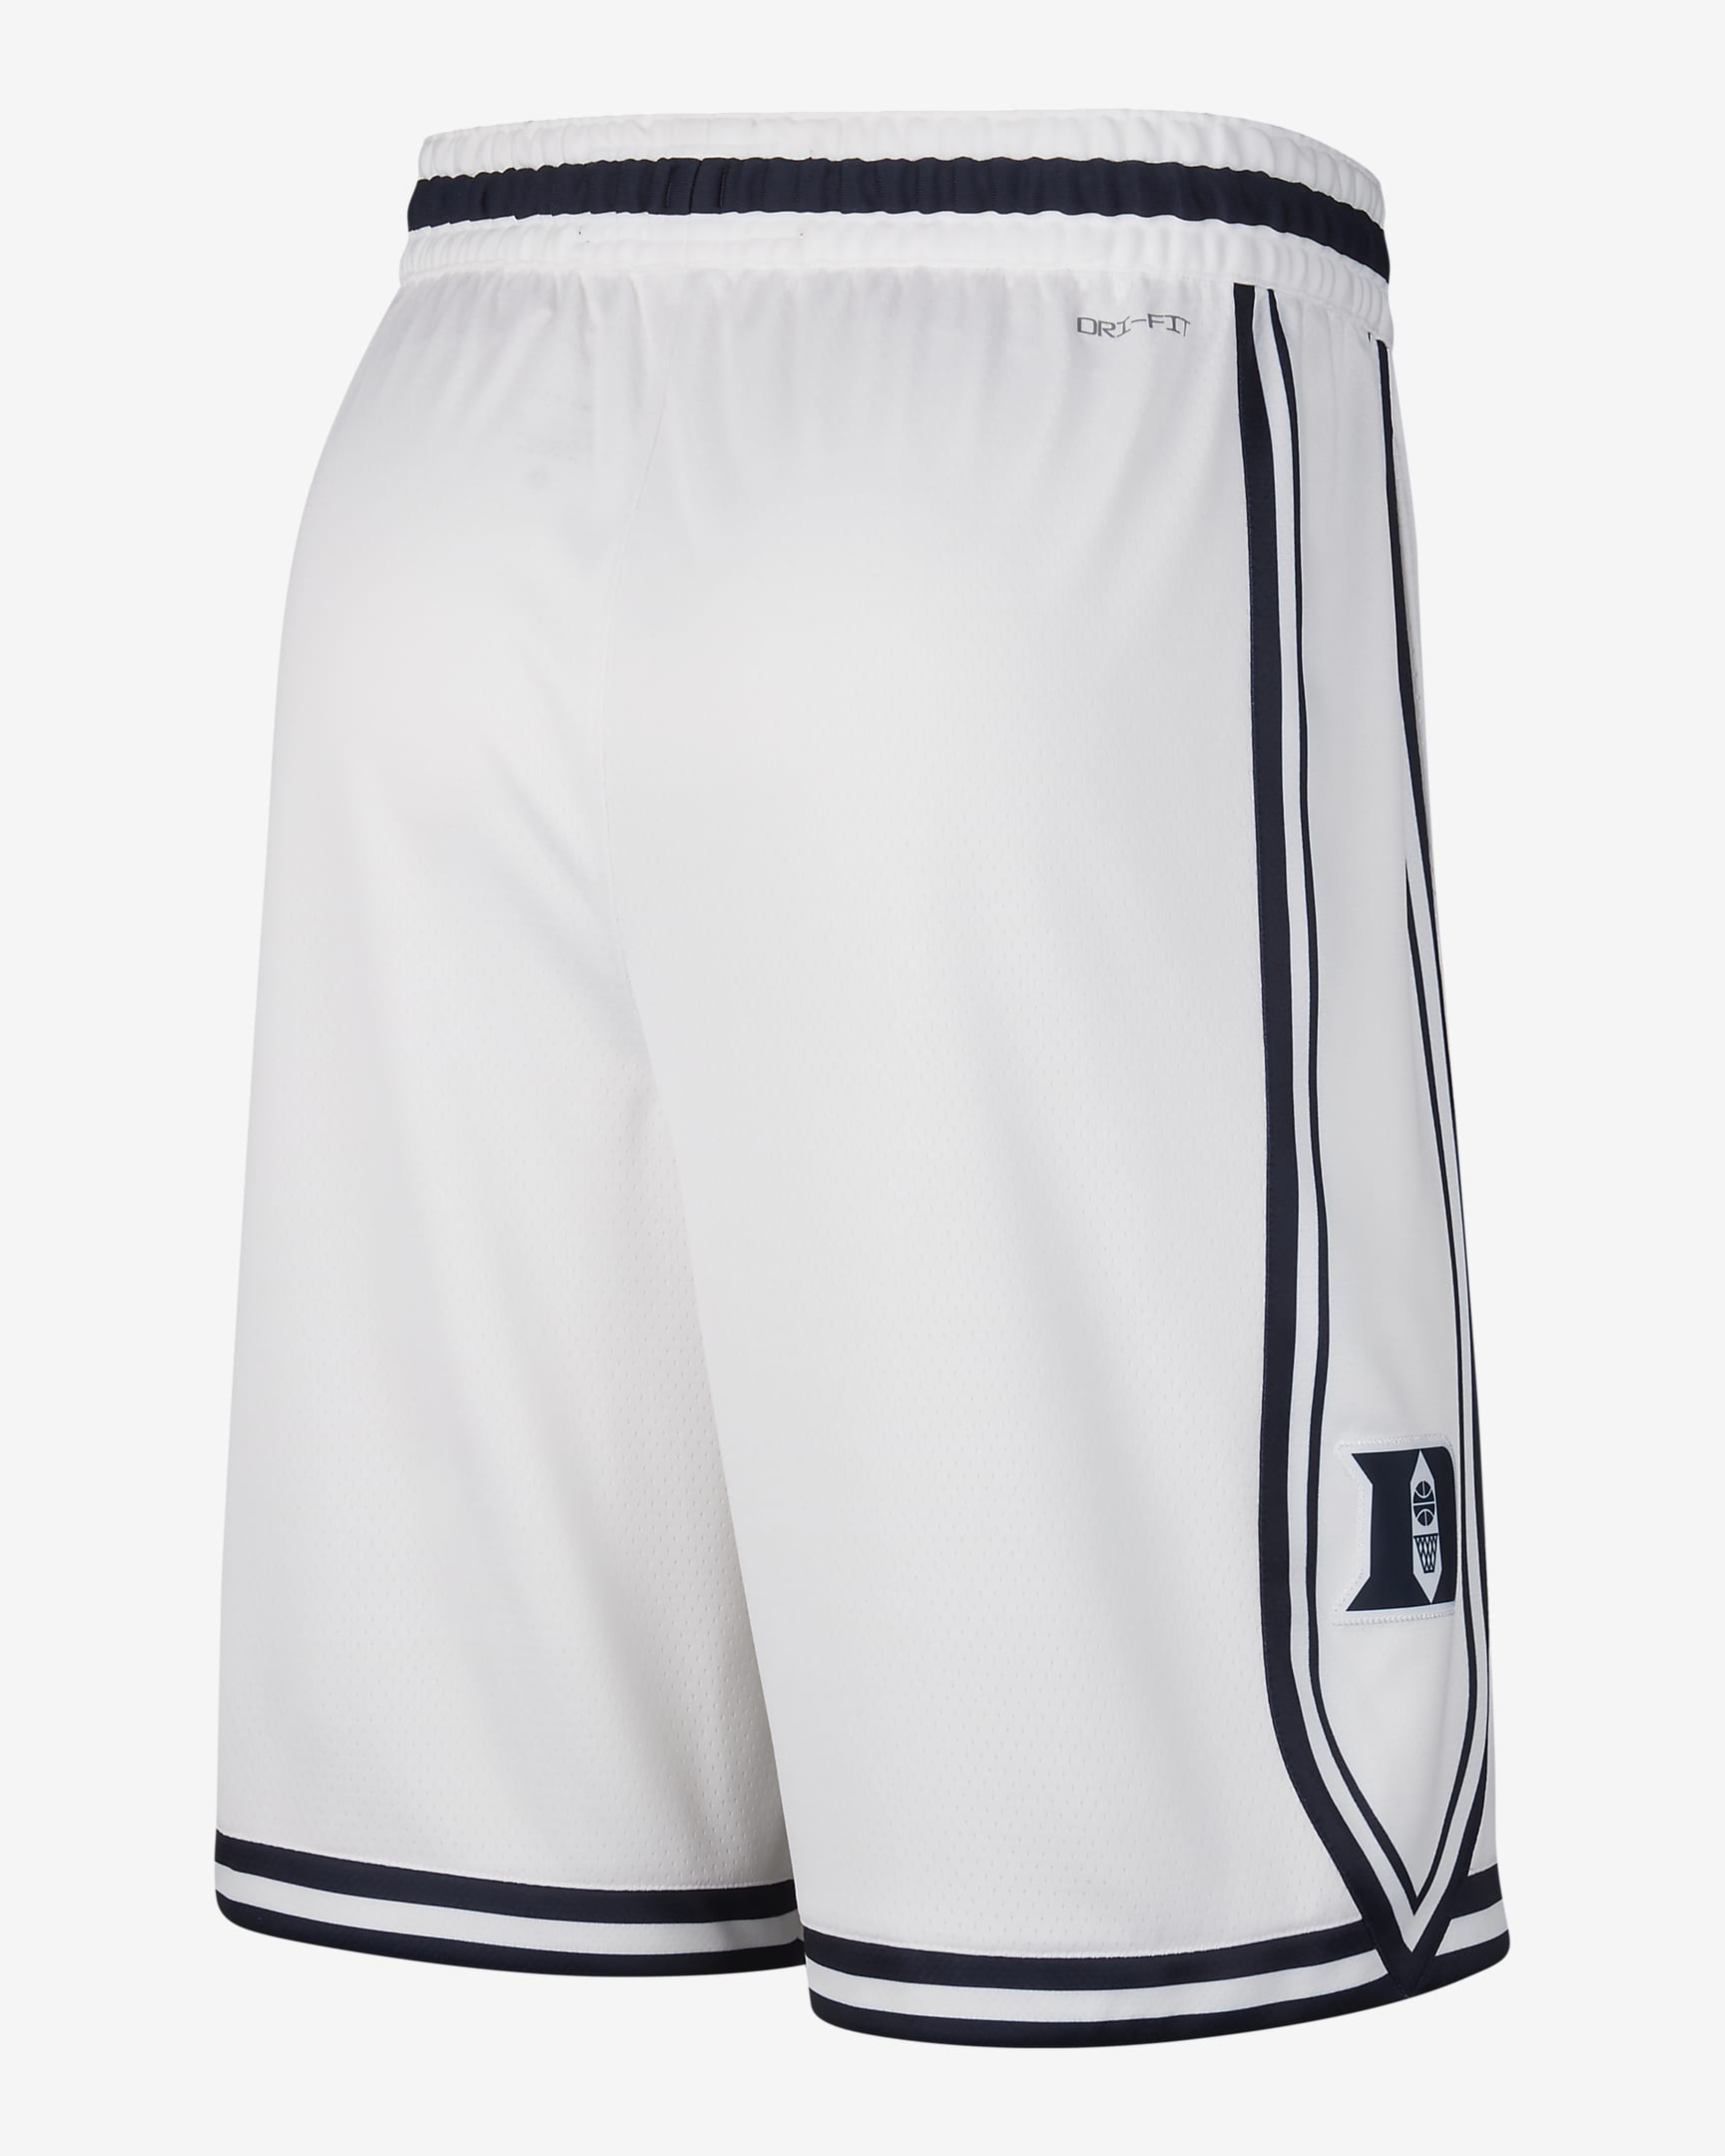 Duke Limited Home Men's Nike Dri-FIT College Basketball Alternate ...